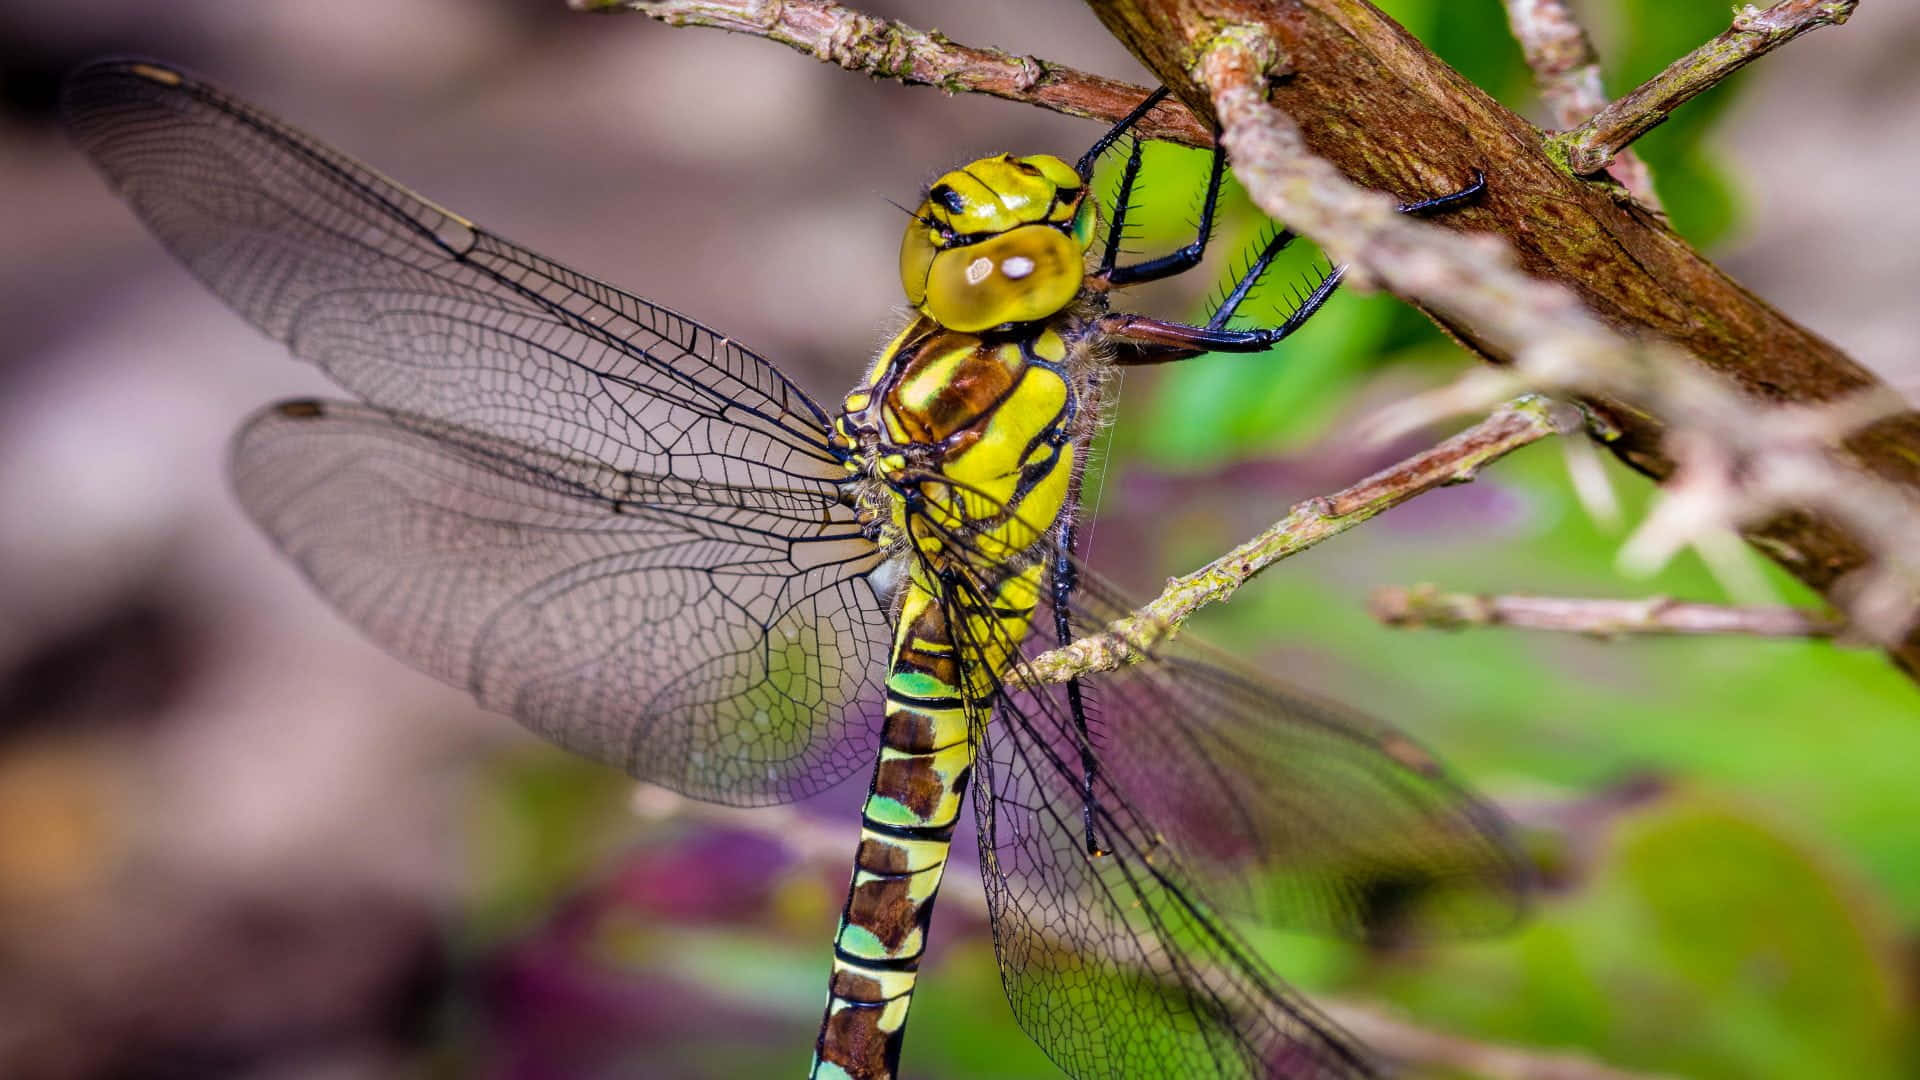 Nature's Beauty - A Dragonfly Taking Flight in a Flower Garden